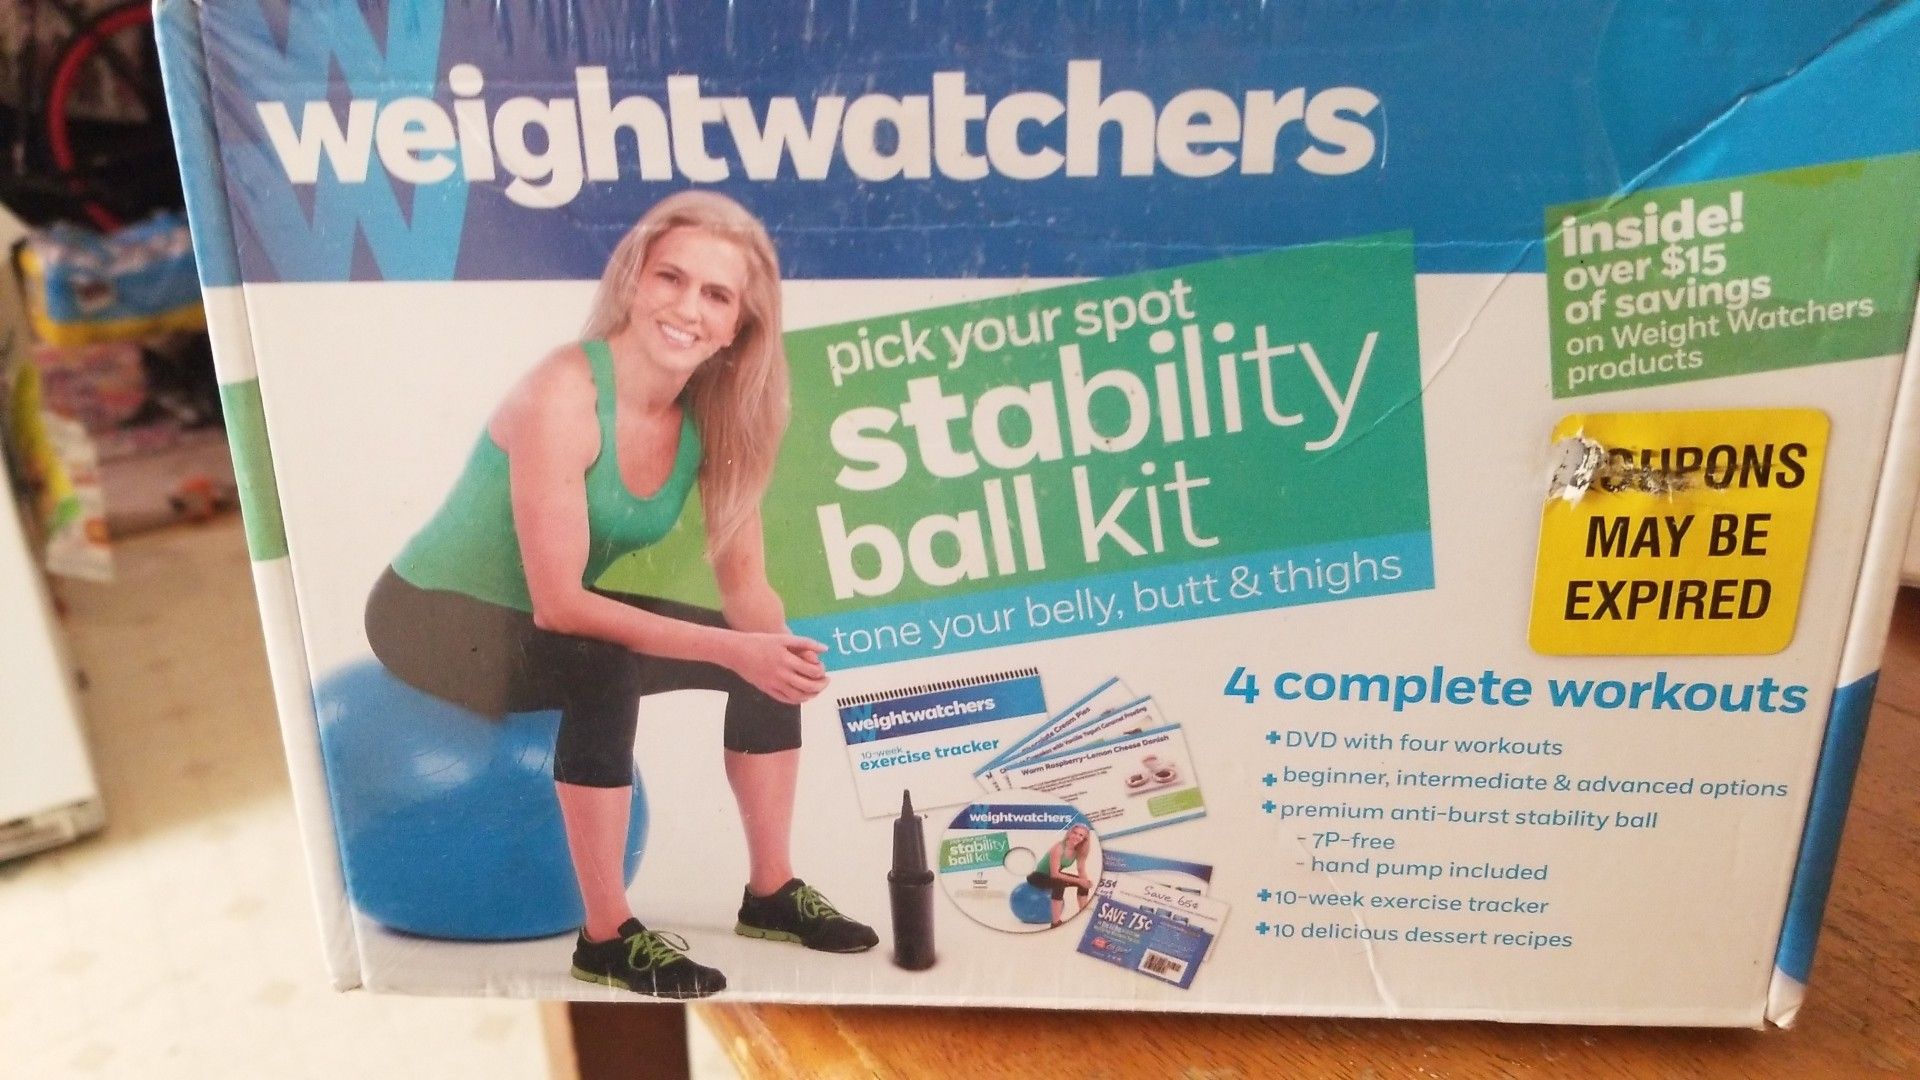 Weight watchers stability ball kit